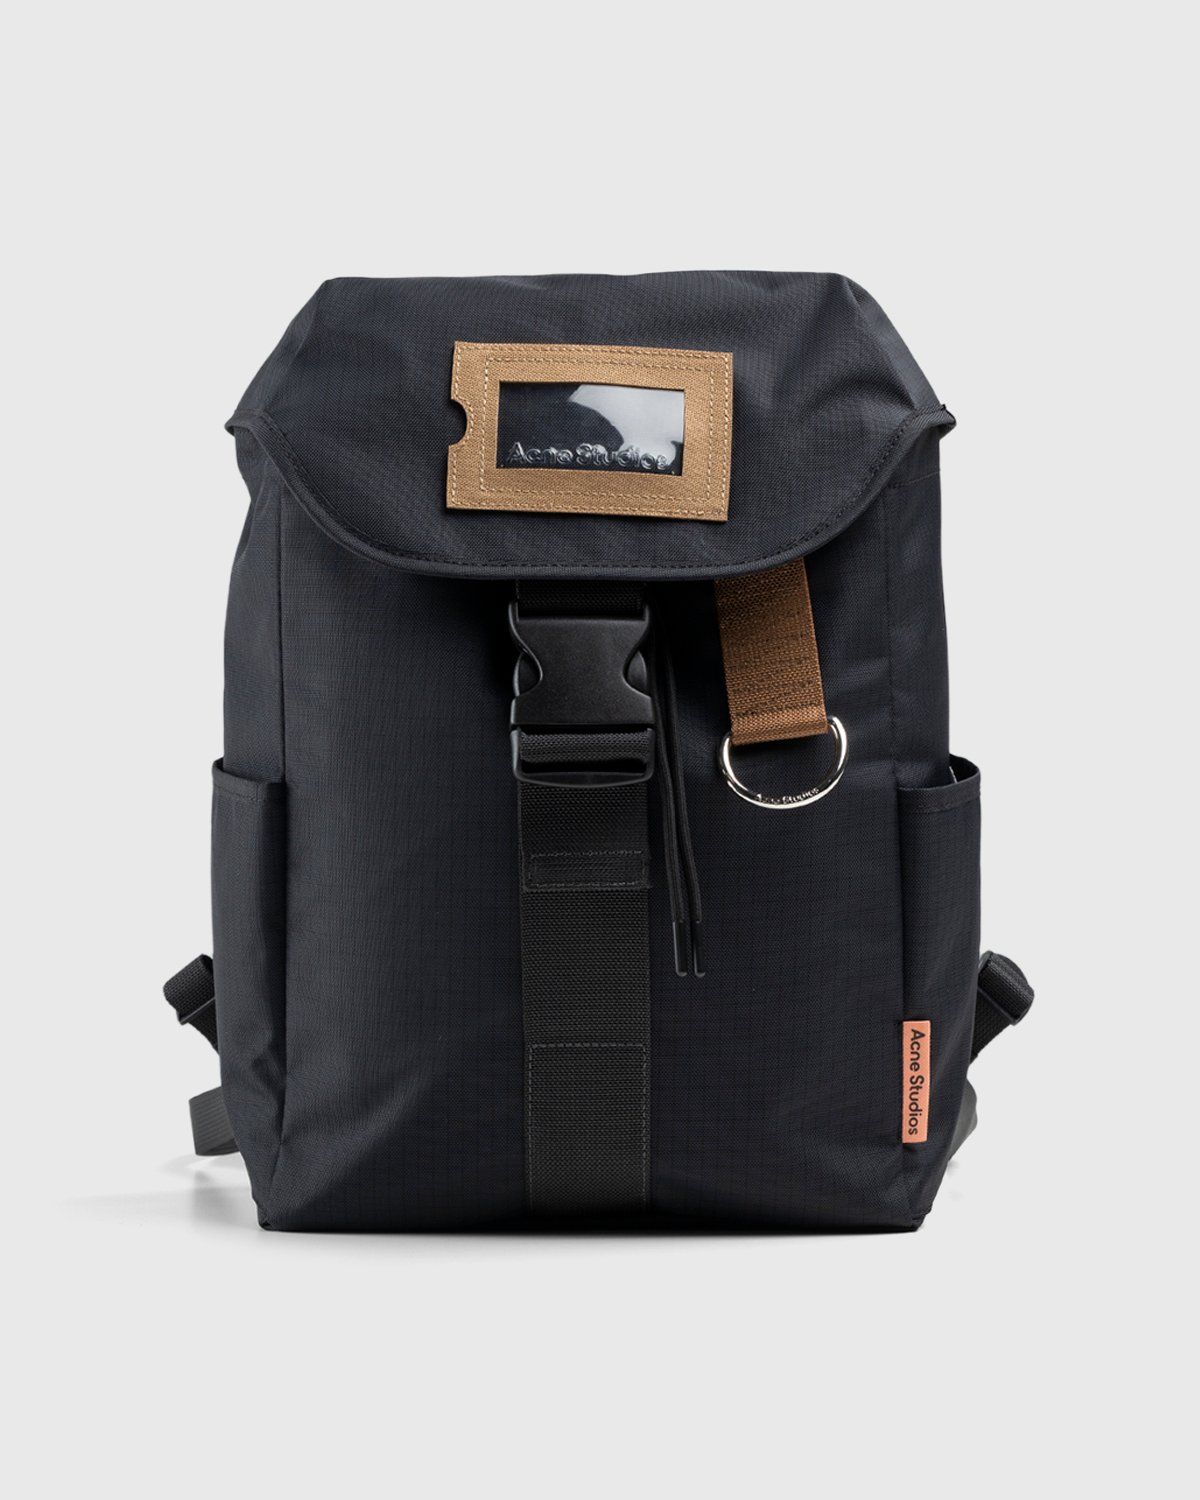 Acne Studios – Large Ripstop Backpack Black/Khaki Green - Bags - Black - Image 1